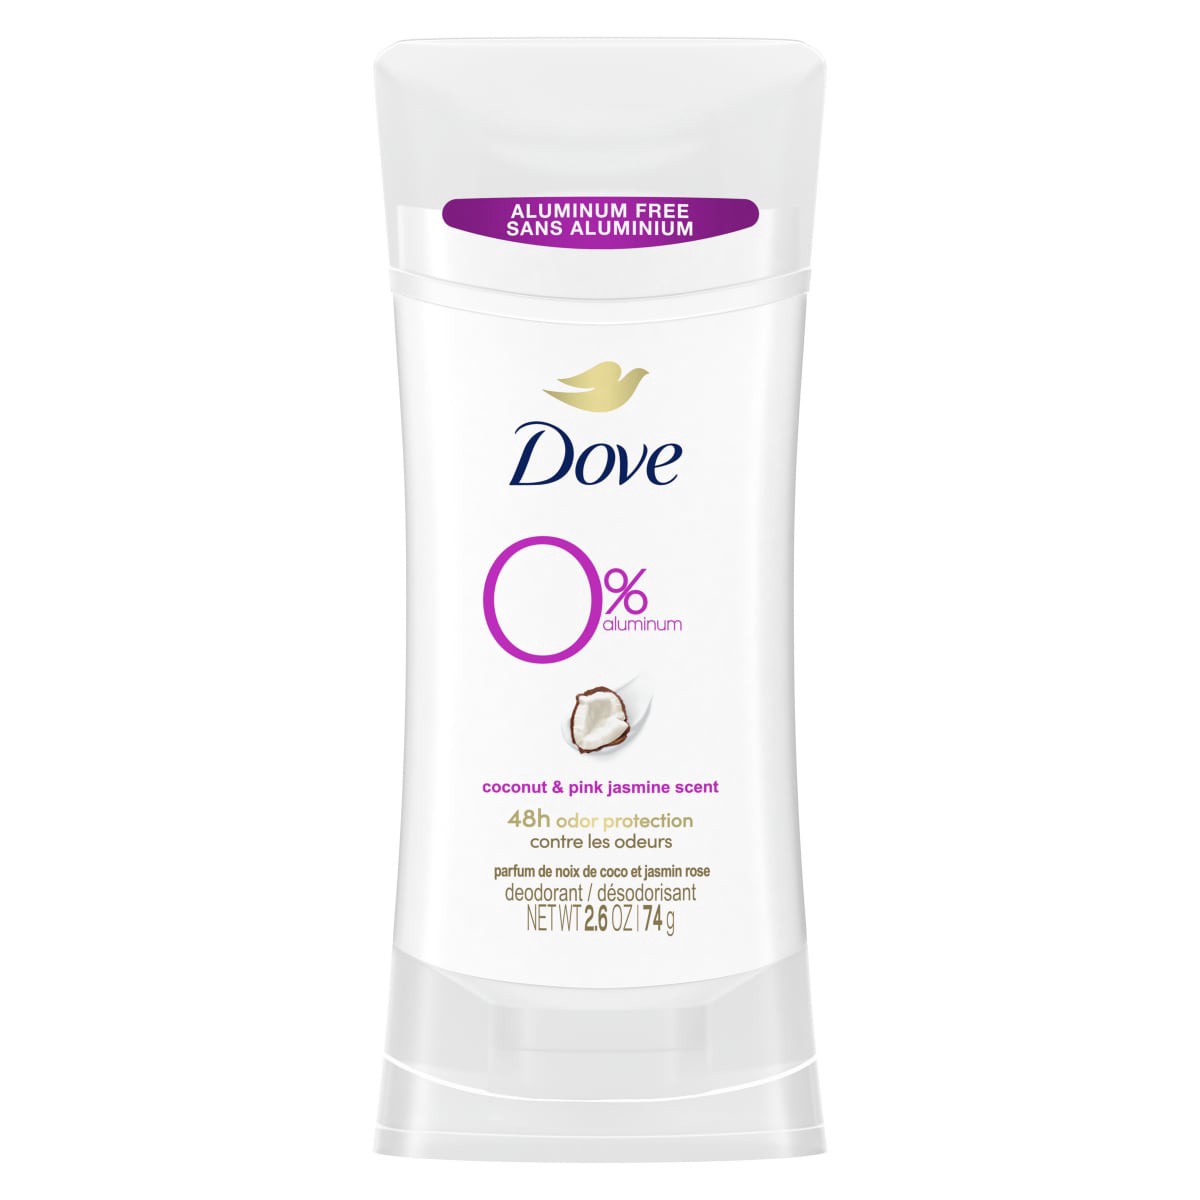 slide 24 of 29, Dove 0% Aluminum Coconut & Pink Jasmine Scent Deodorant 2.6 oz, 2.6 oz